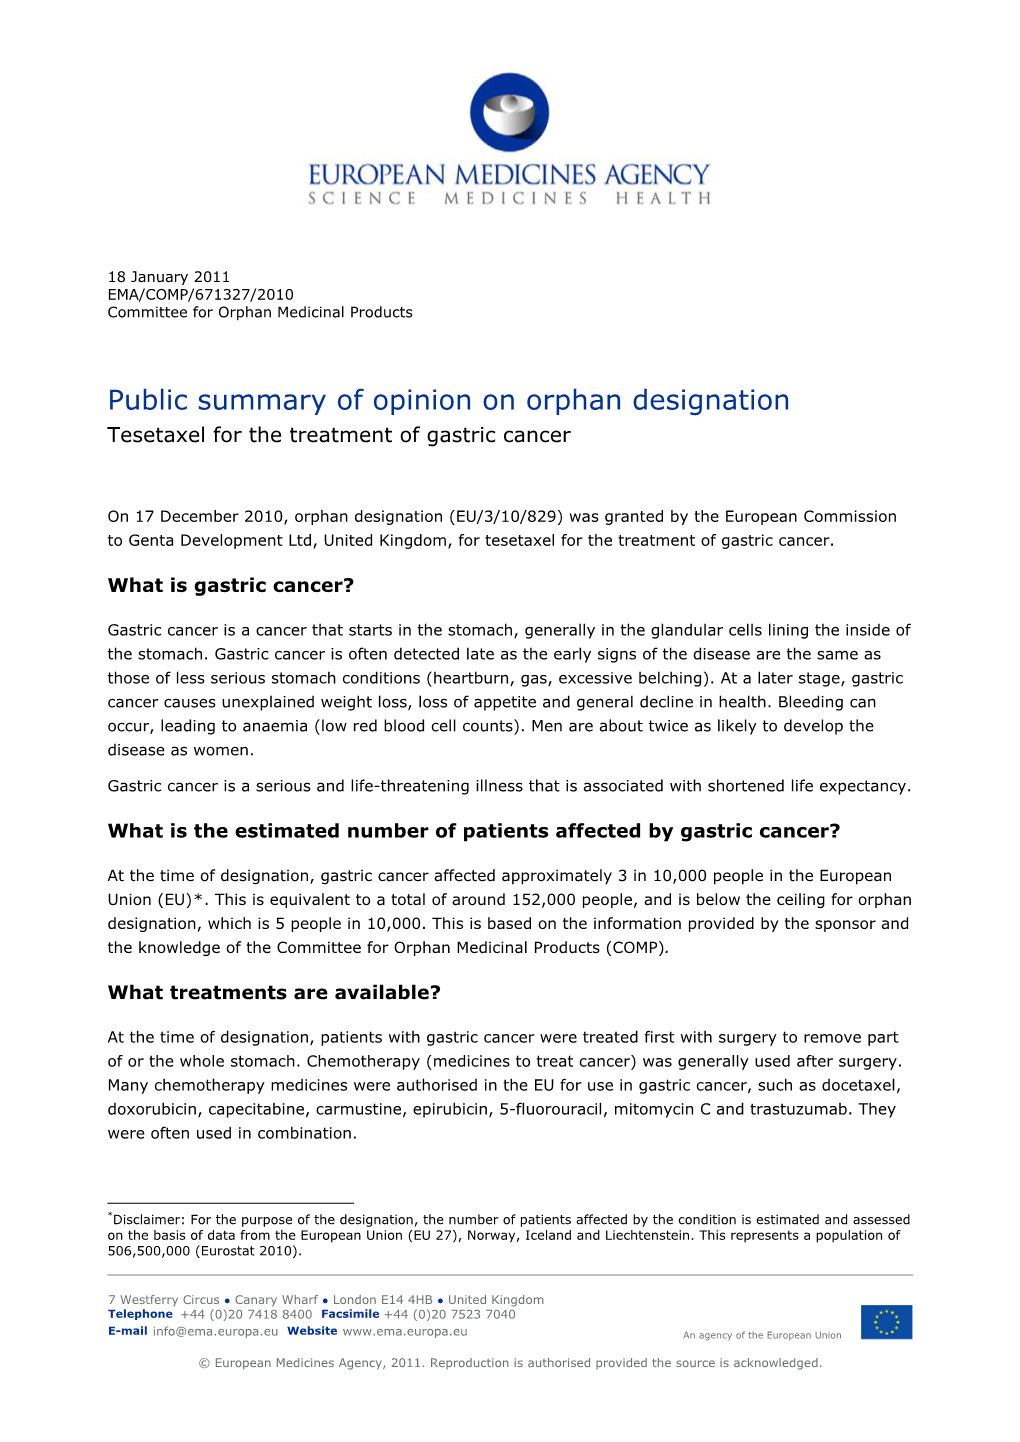 Public Summary of Opinion on Orphan Designation: Tesetaxel For